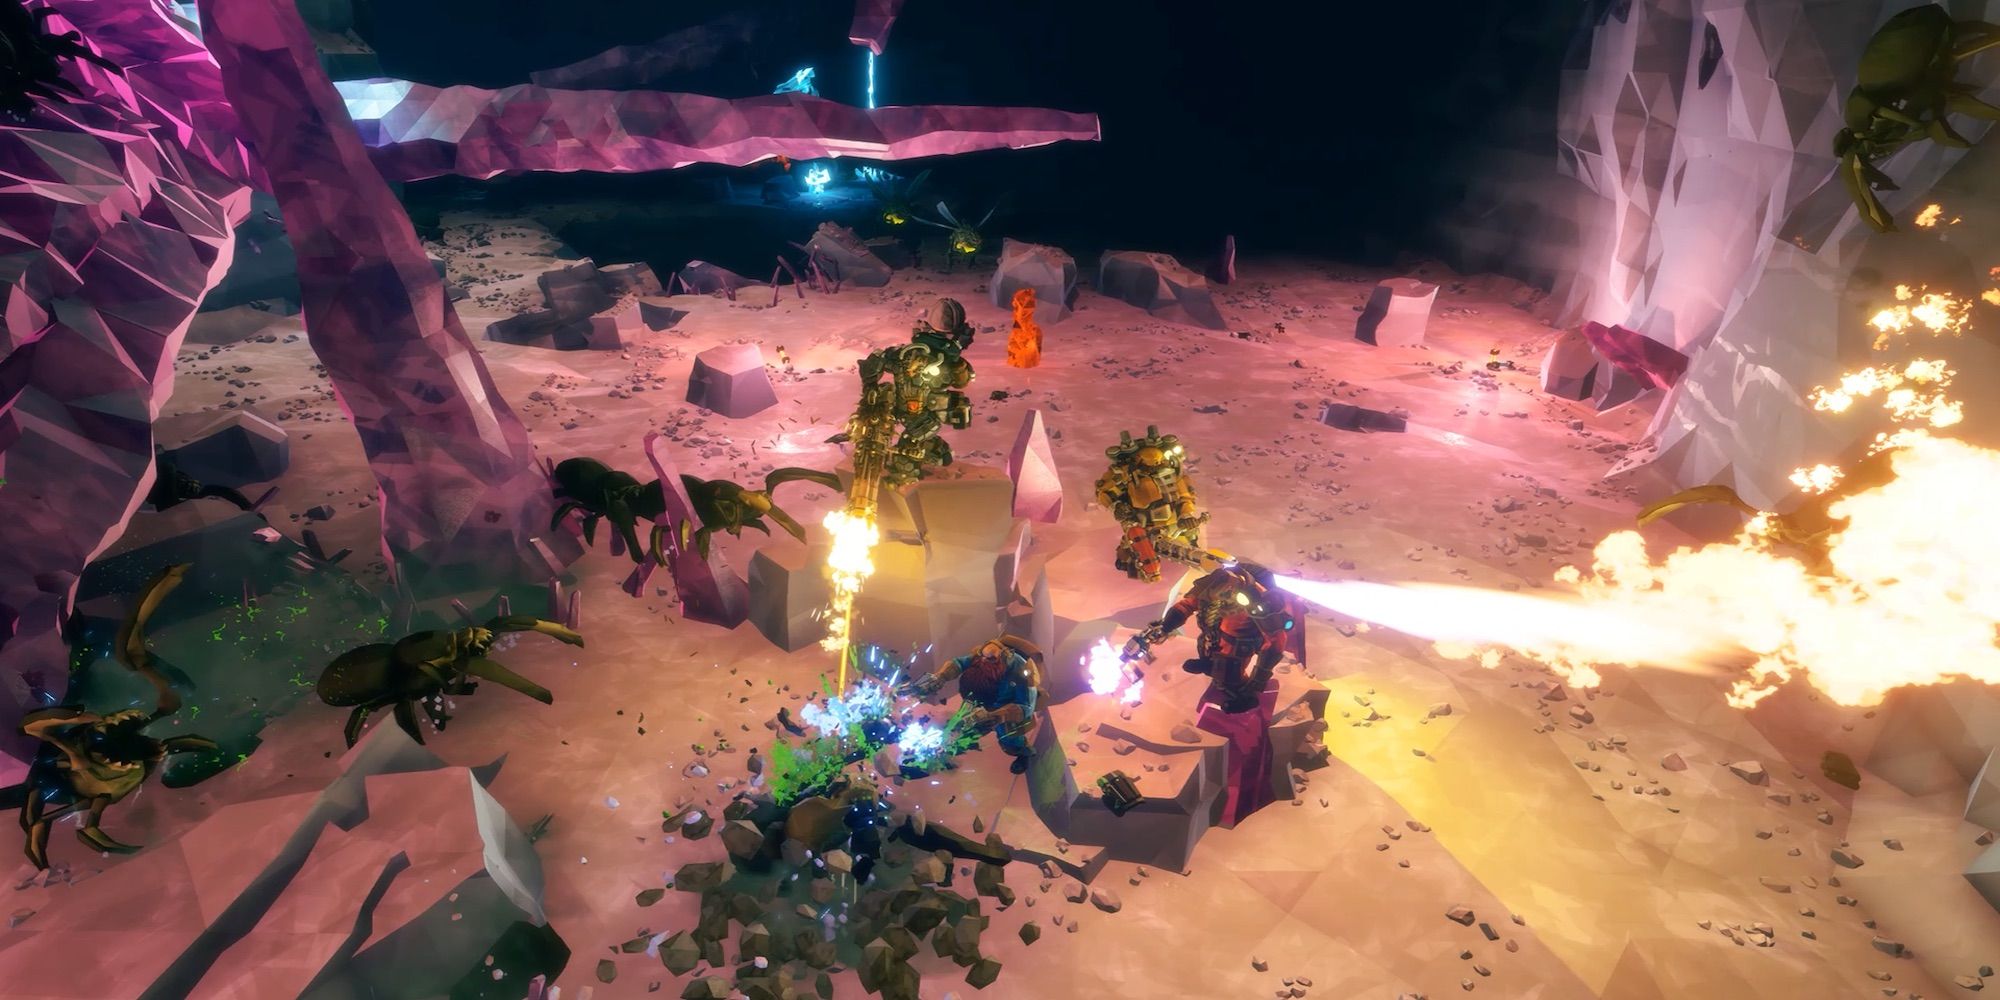 Players fighting enemies in the mines (Deep Rock Galactic)